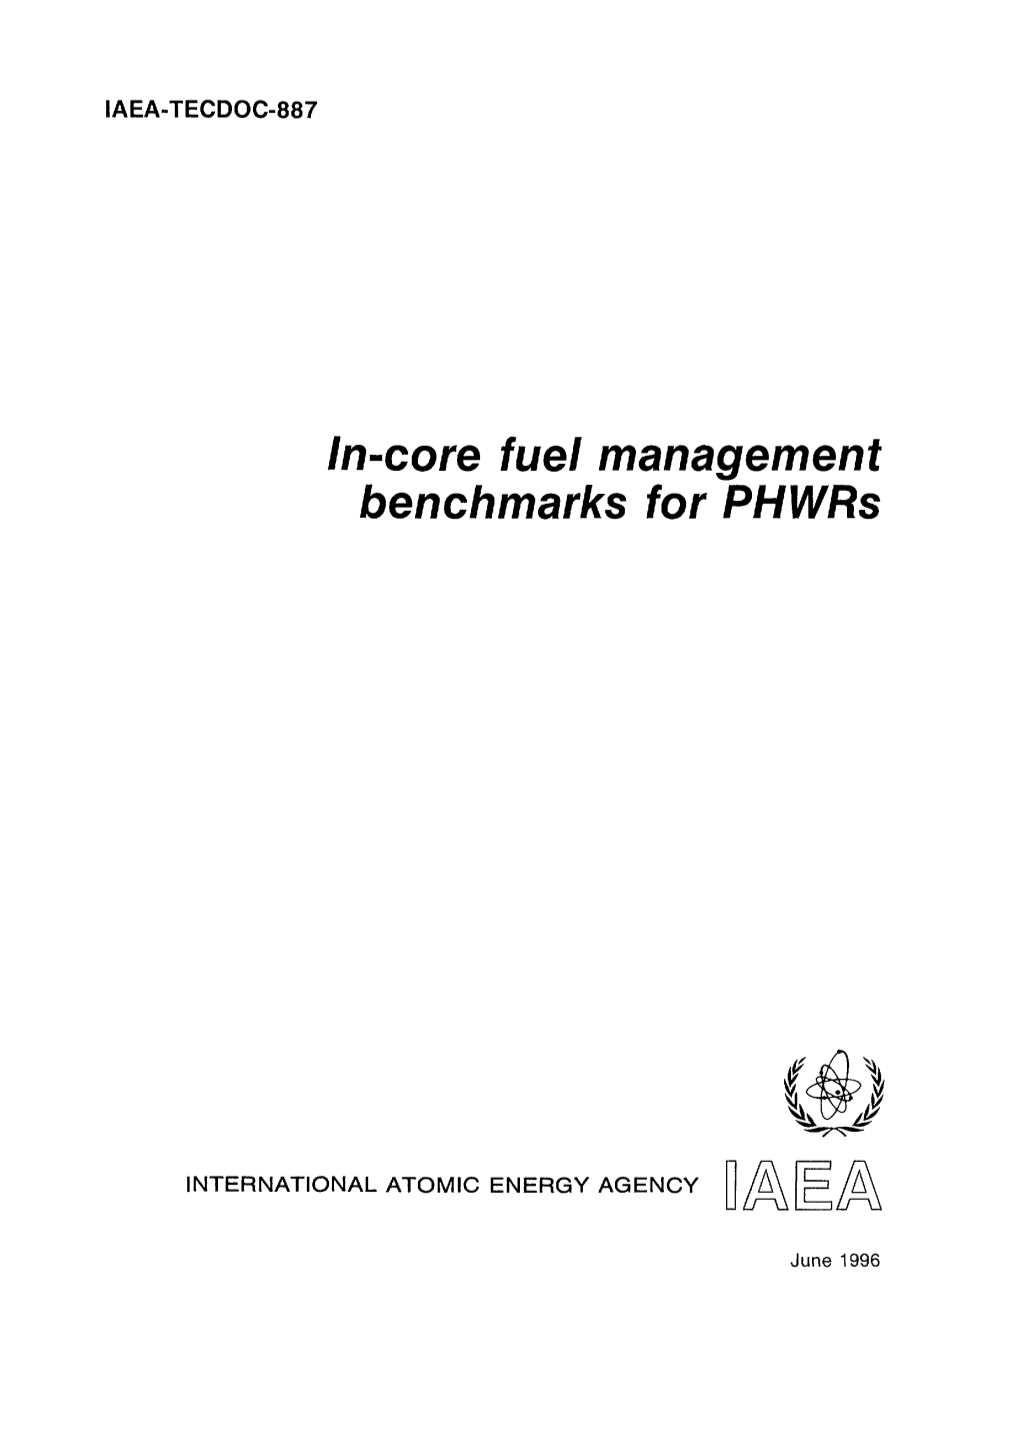 IN-CORE FUEL MANAGEMENT BENCHMARKS for Phwrs IAEA, VIENNA, 1996 IAEA-TECDOC-887 ISSN 1011-4289 © IAEA, 1996 Printed by the IAEA in Austria June 1996 FOREWORD